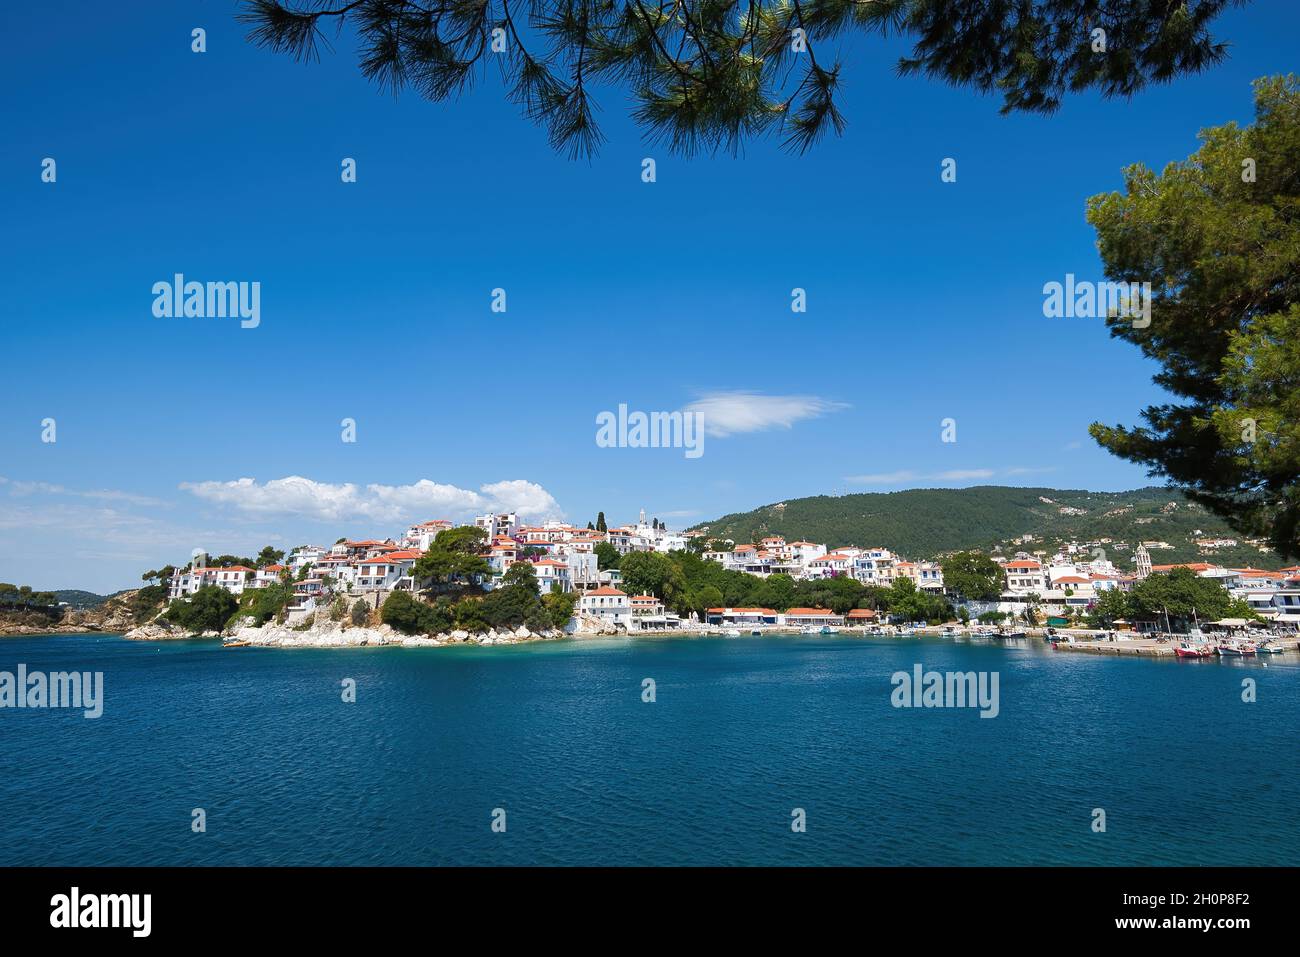 the ultimate summer tourist destination. The old port. Skiathos island, Greece Stock Photo